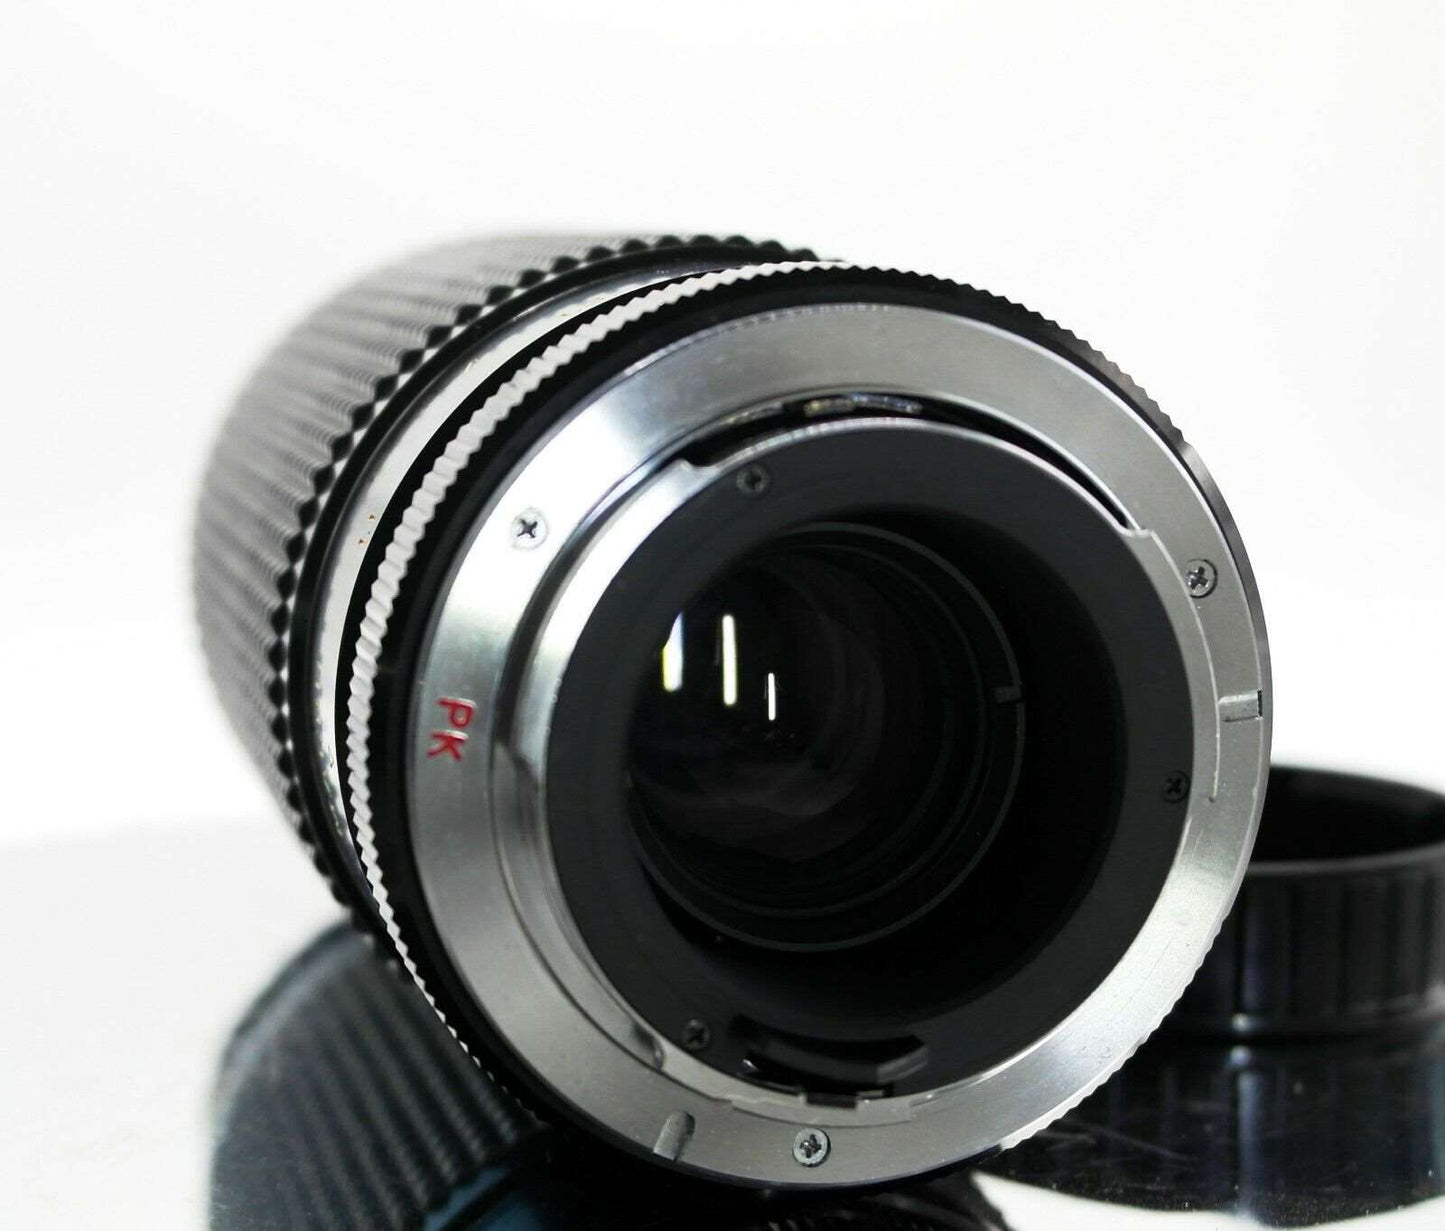 Pentax Mount Zoom Lens f80-200mm 1:4.5-5.2 Itorex with UV Filter Rear Lens Cap